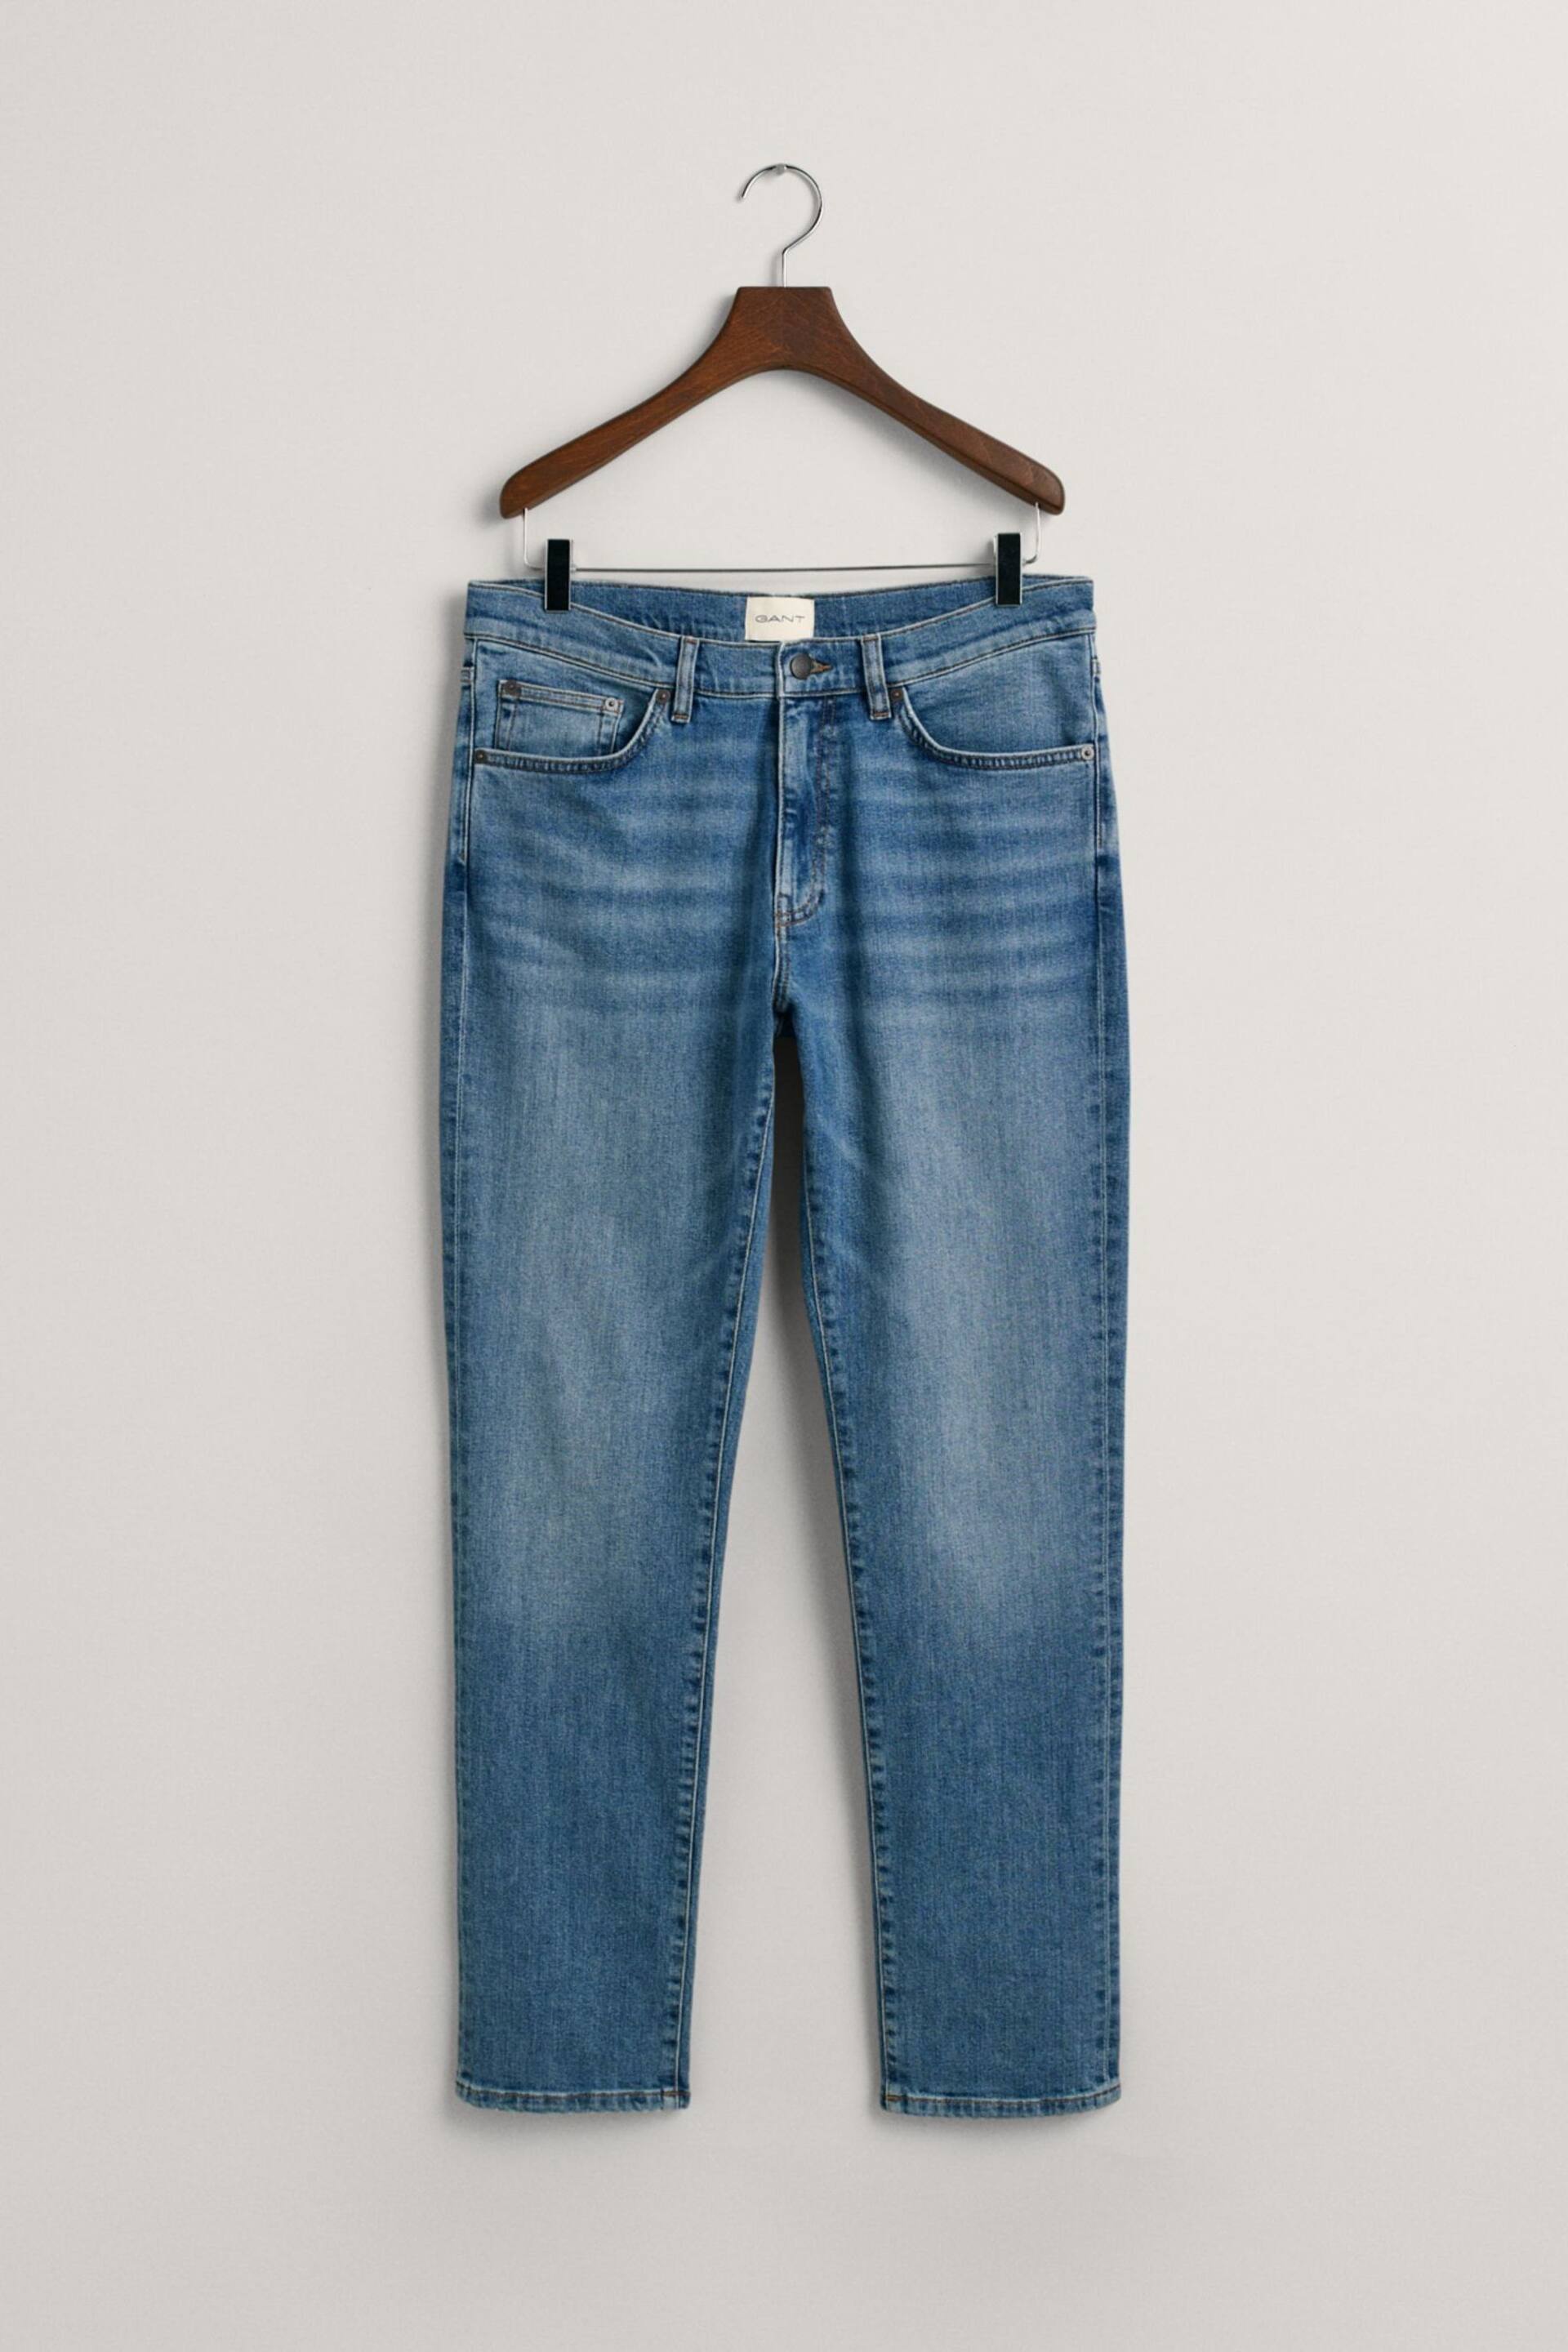 GANT Worn In Slim Fit Jeans - Image 5 of 5